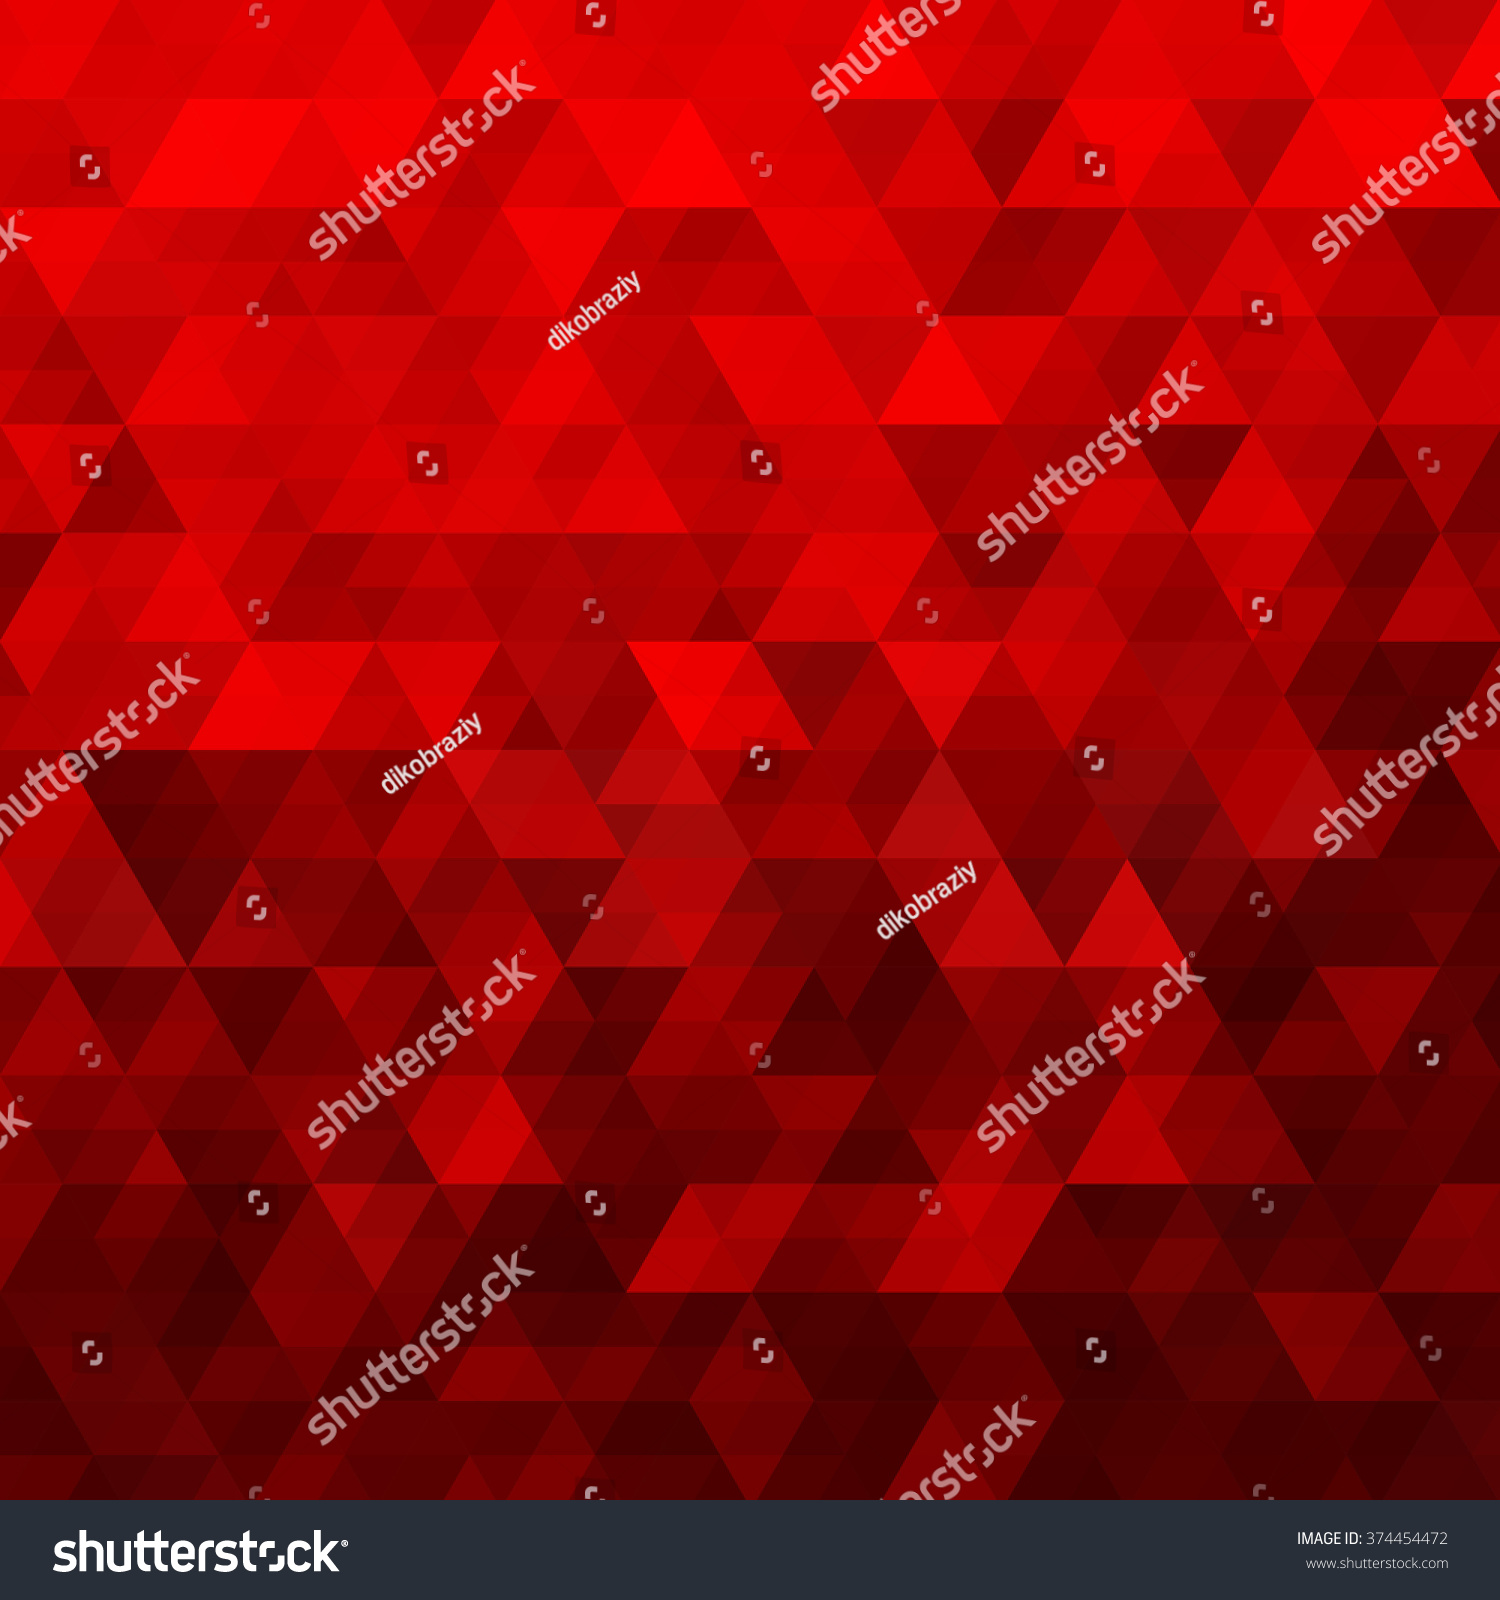 Background Merah Motif Segitiga Hd Wallpaper Wallpaper Hd Segitiga My